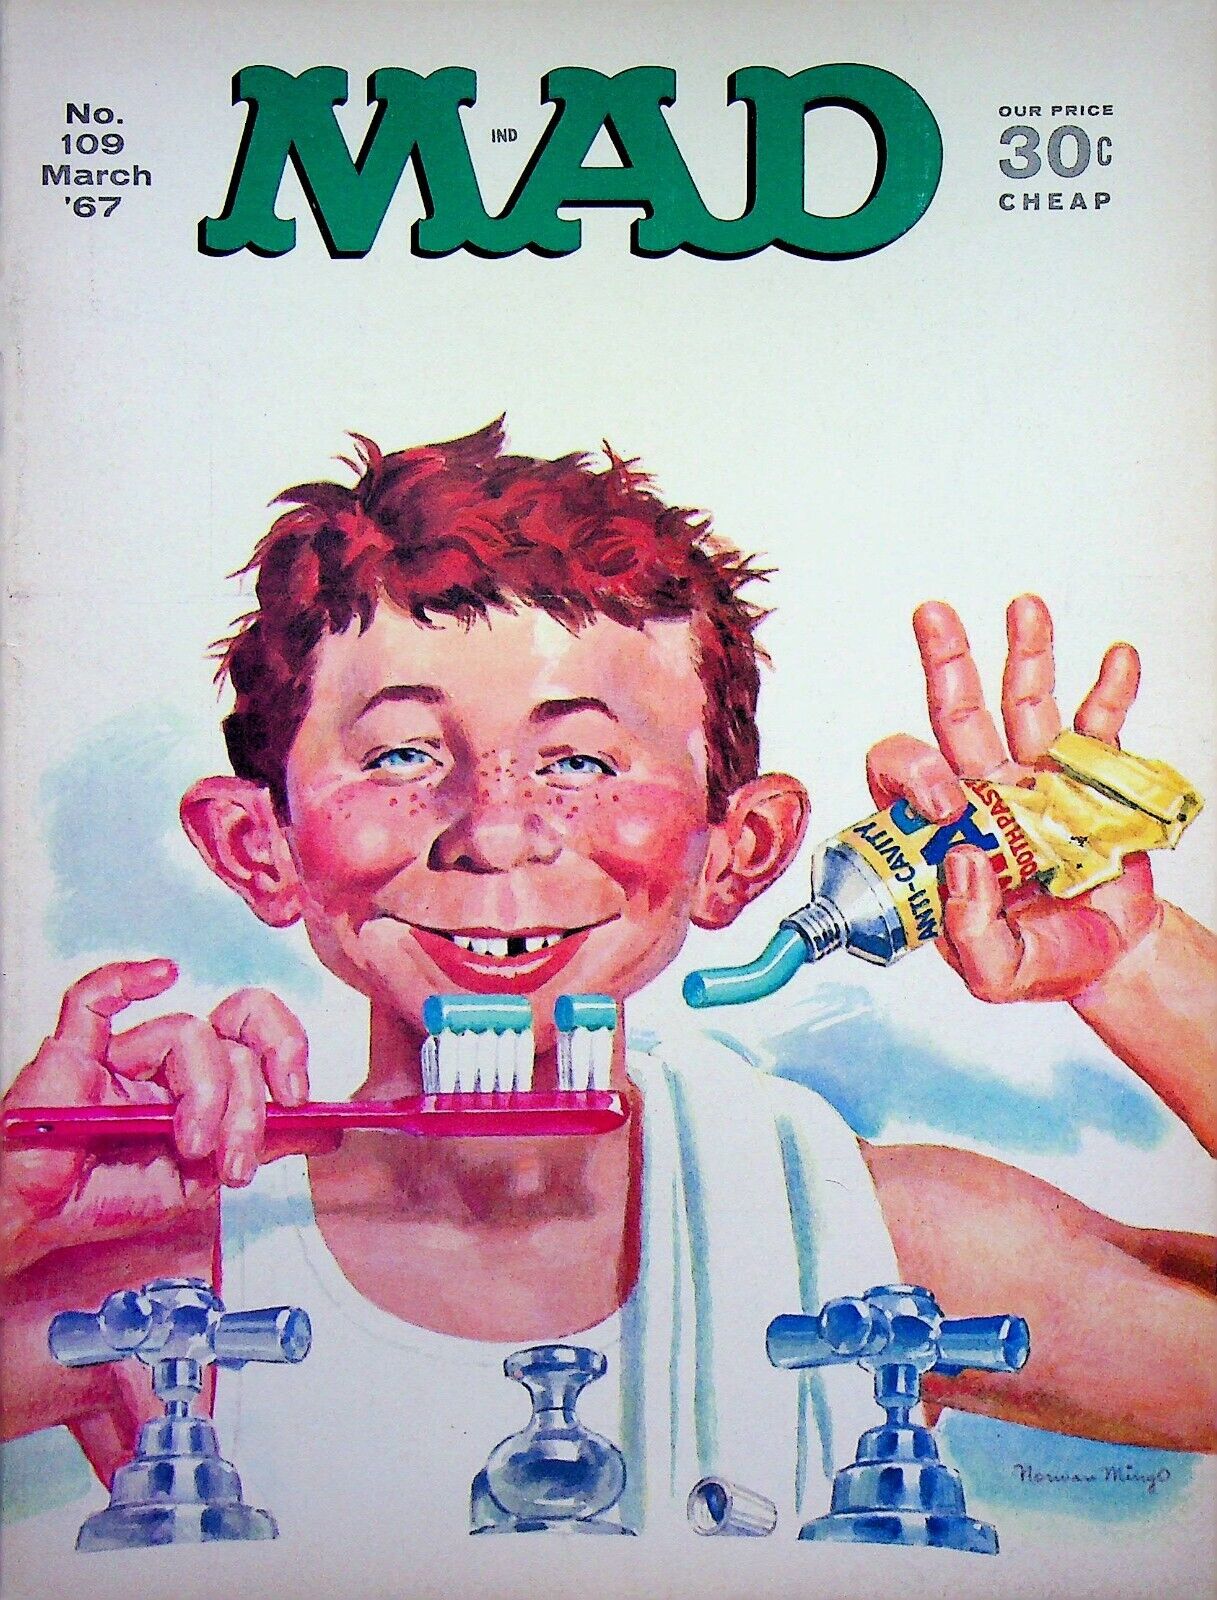 Vtg MAD Magazine Issue No. 109 March 1967